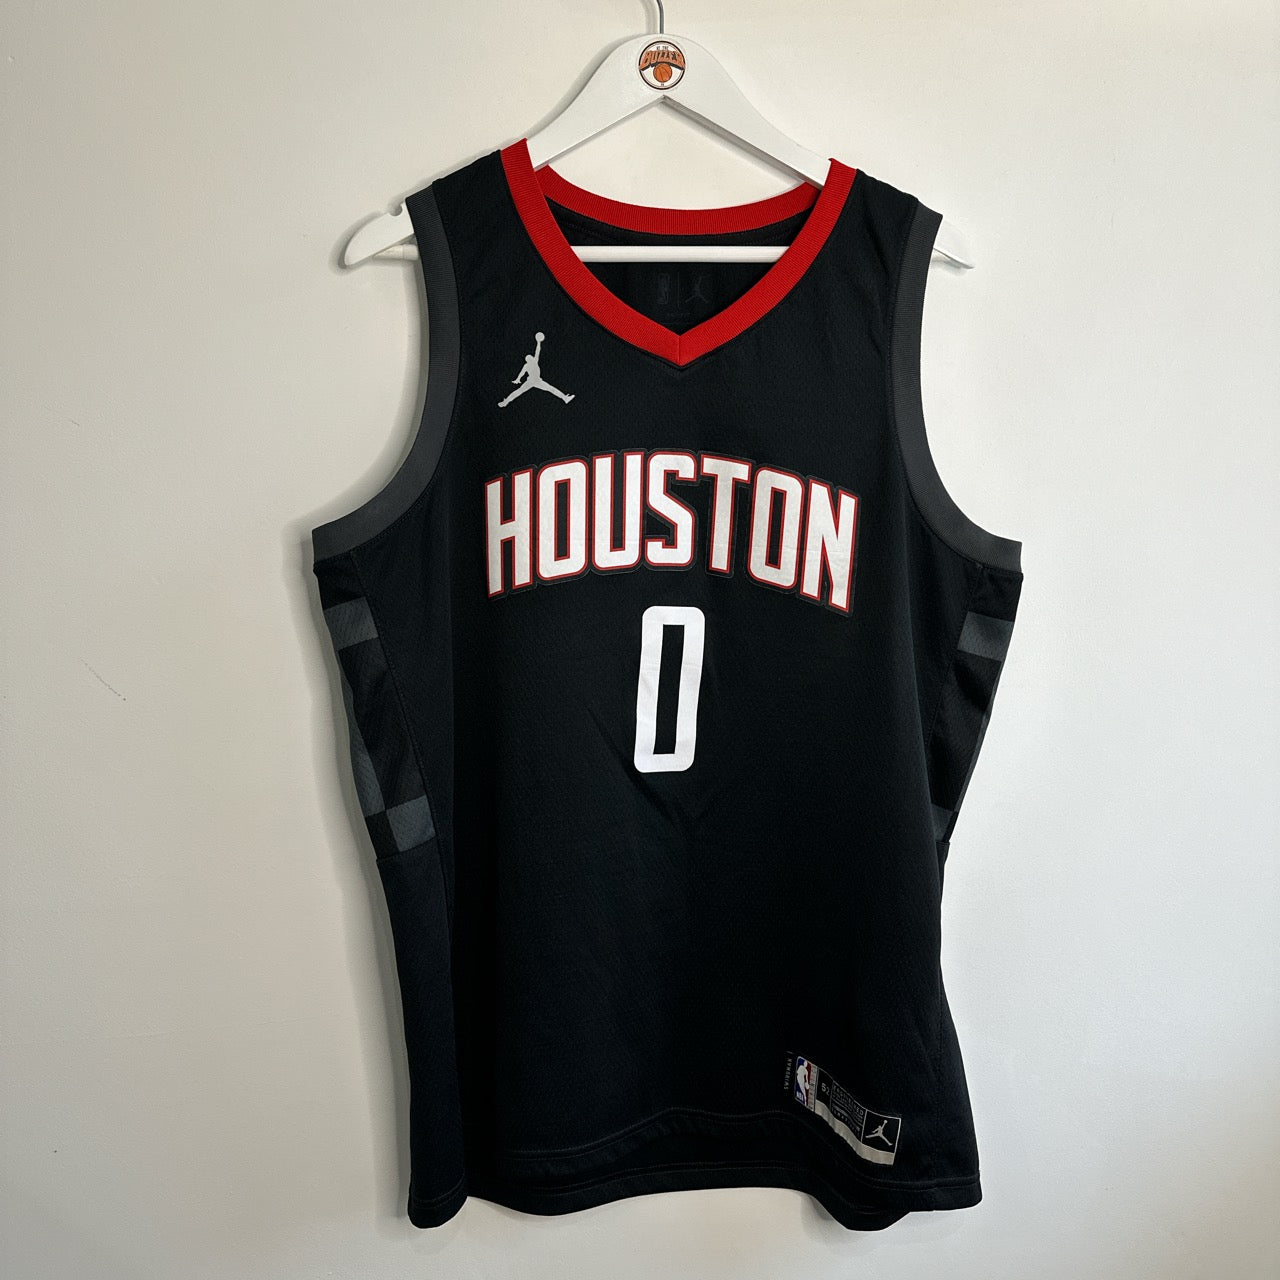 Houston Rockets Jalen Green Jordan jersey - XL